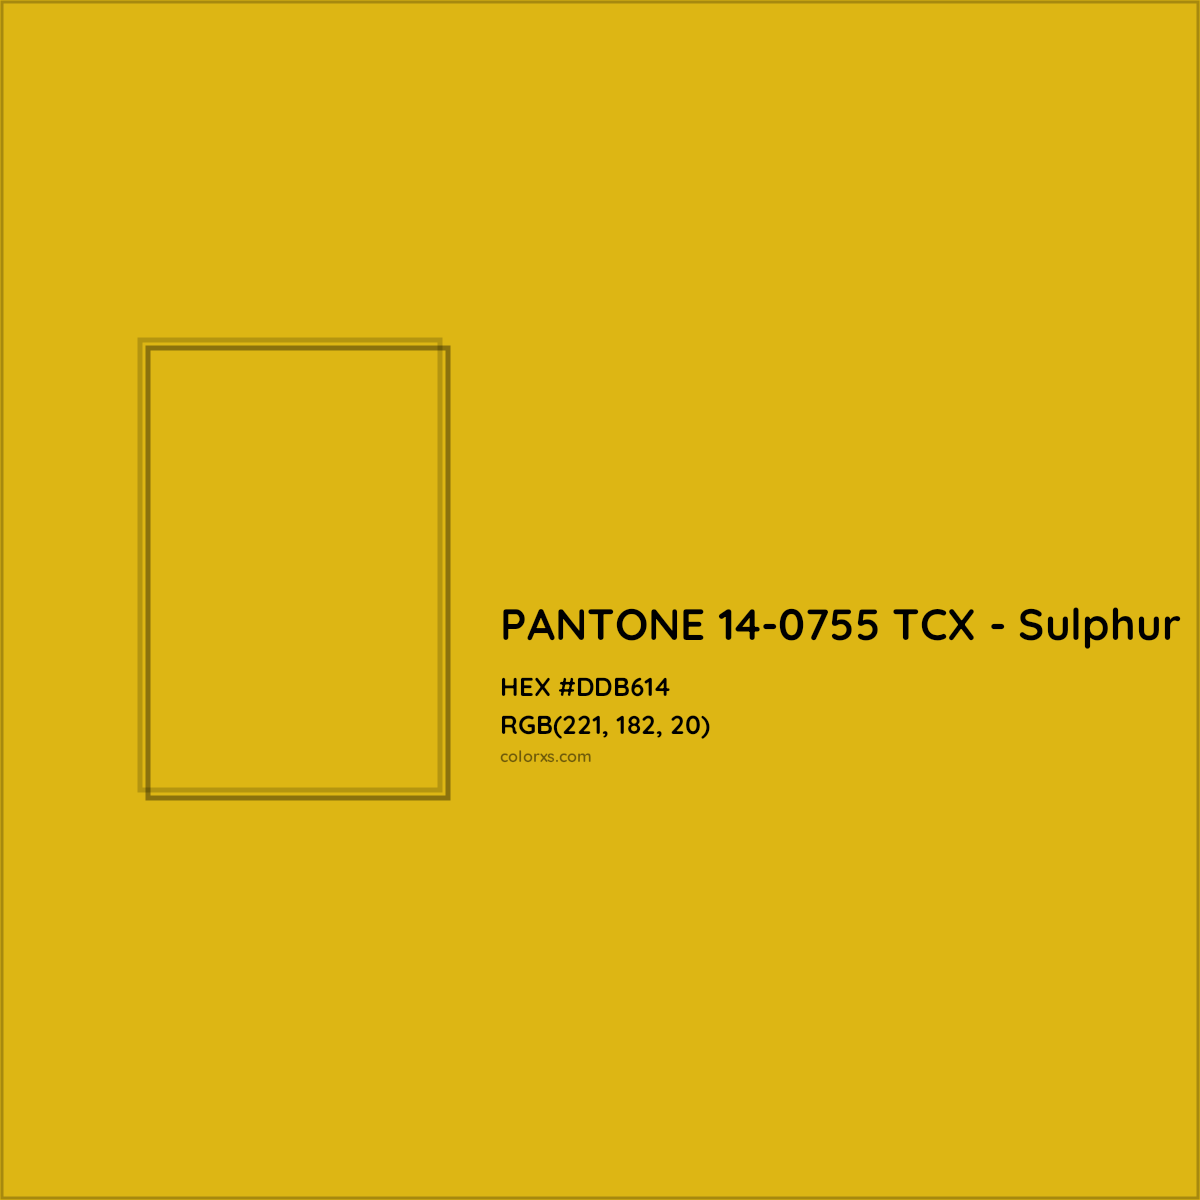 HEX #DDB614 PANTONE 14-0755 TCX - Sulphur CMS Pantone TCX - Color Code